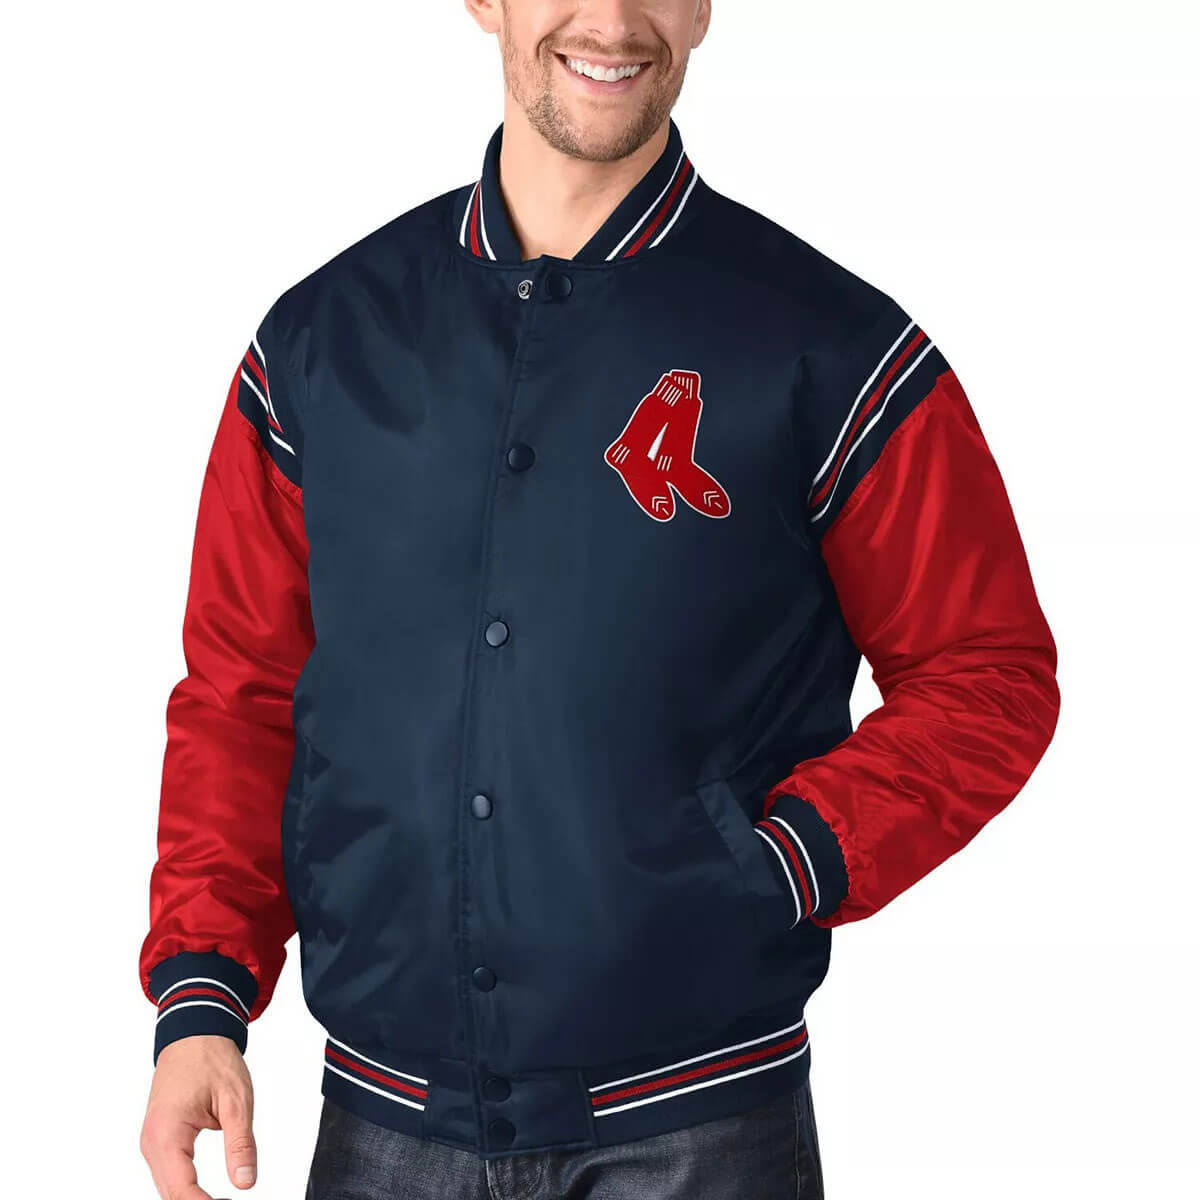 Maker of Jacket MLB Boston Red Sox Navy&Red Varsity Satin